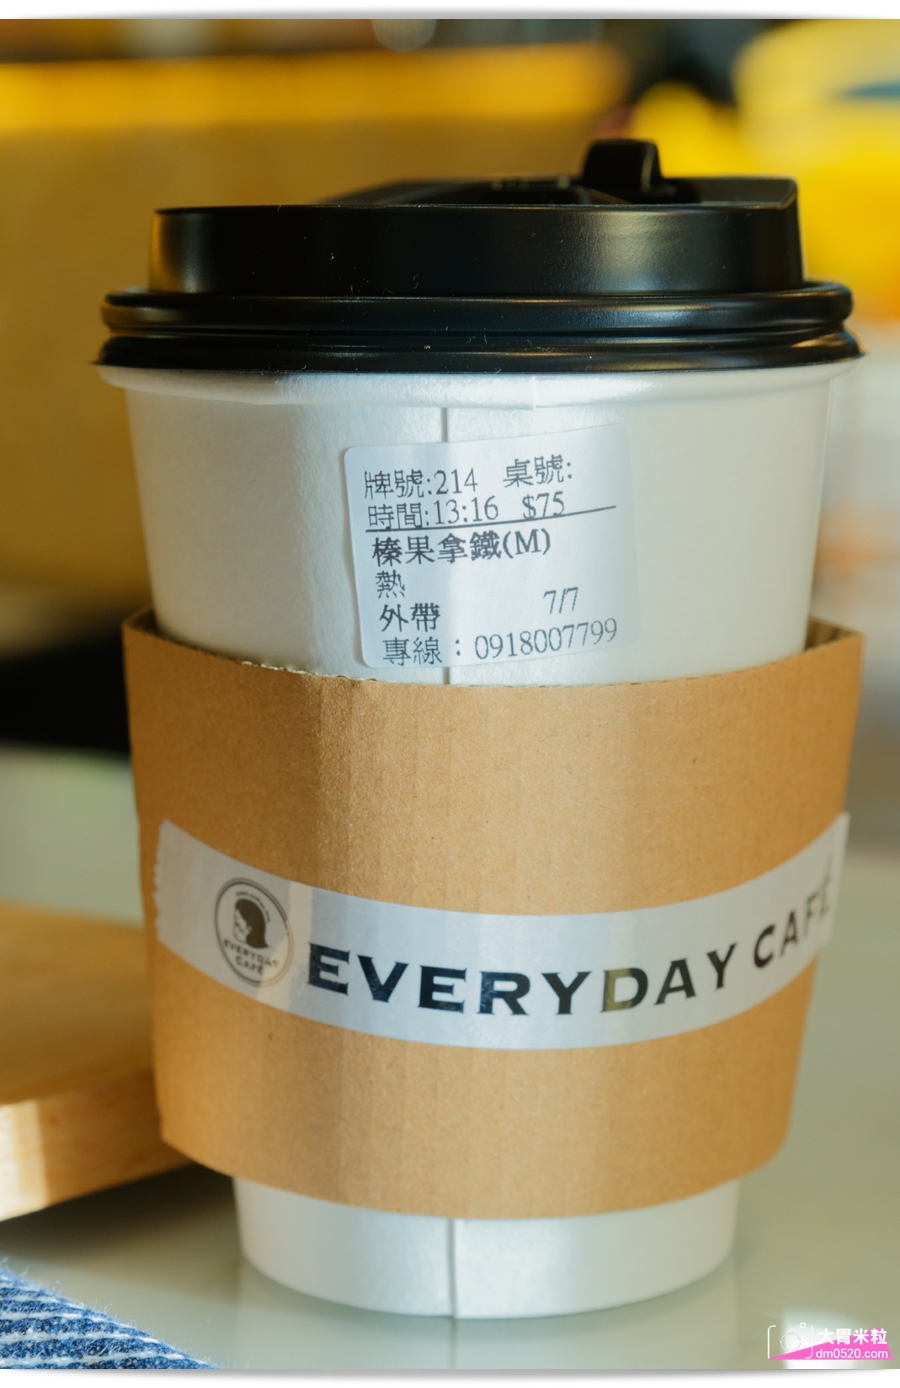 EVERYDAY CAFE永和頂溪店